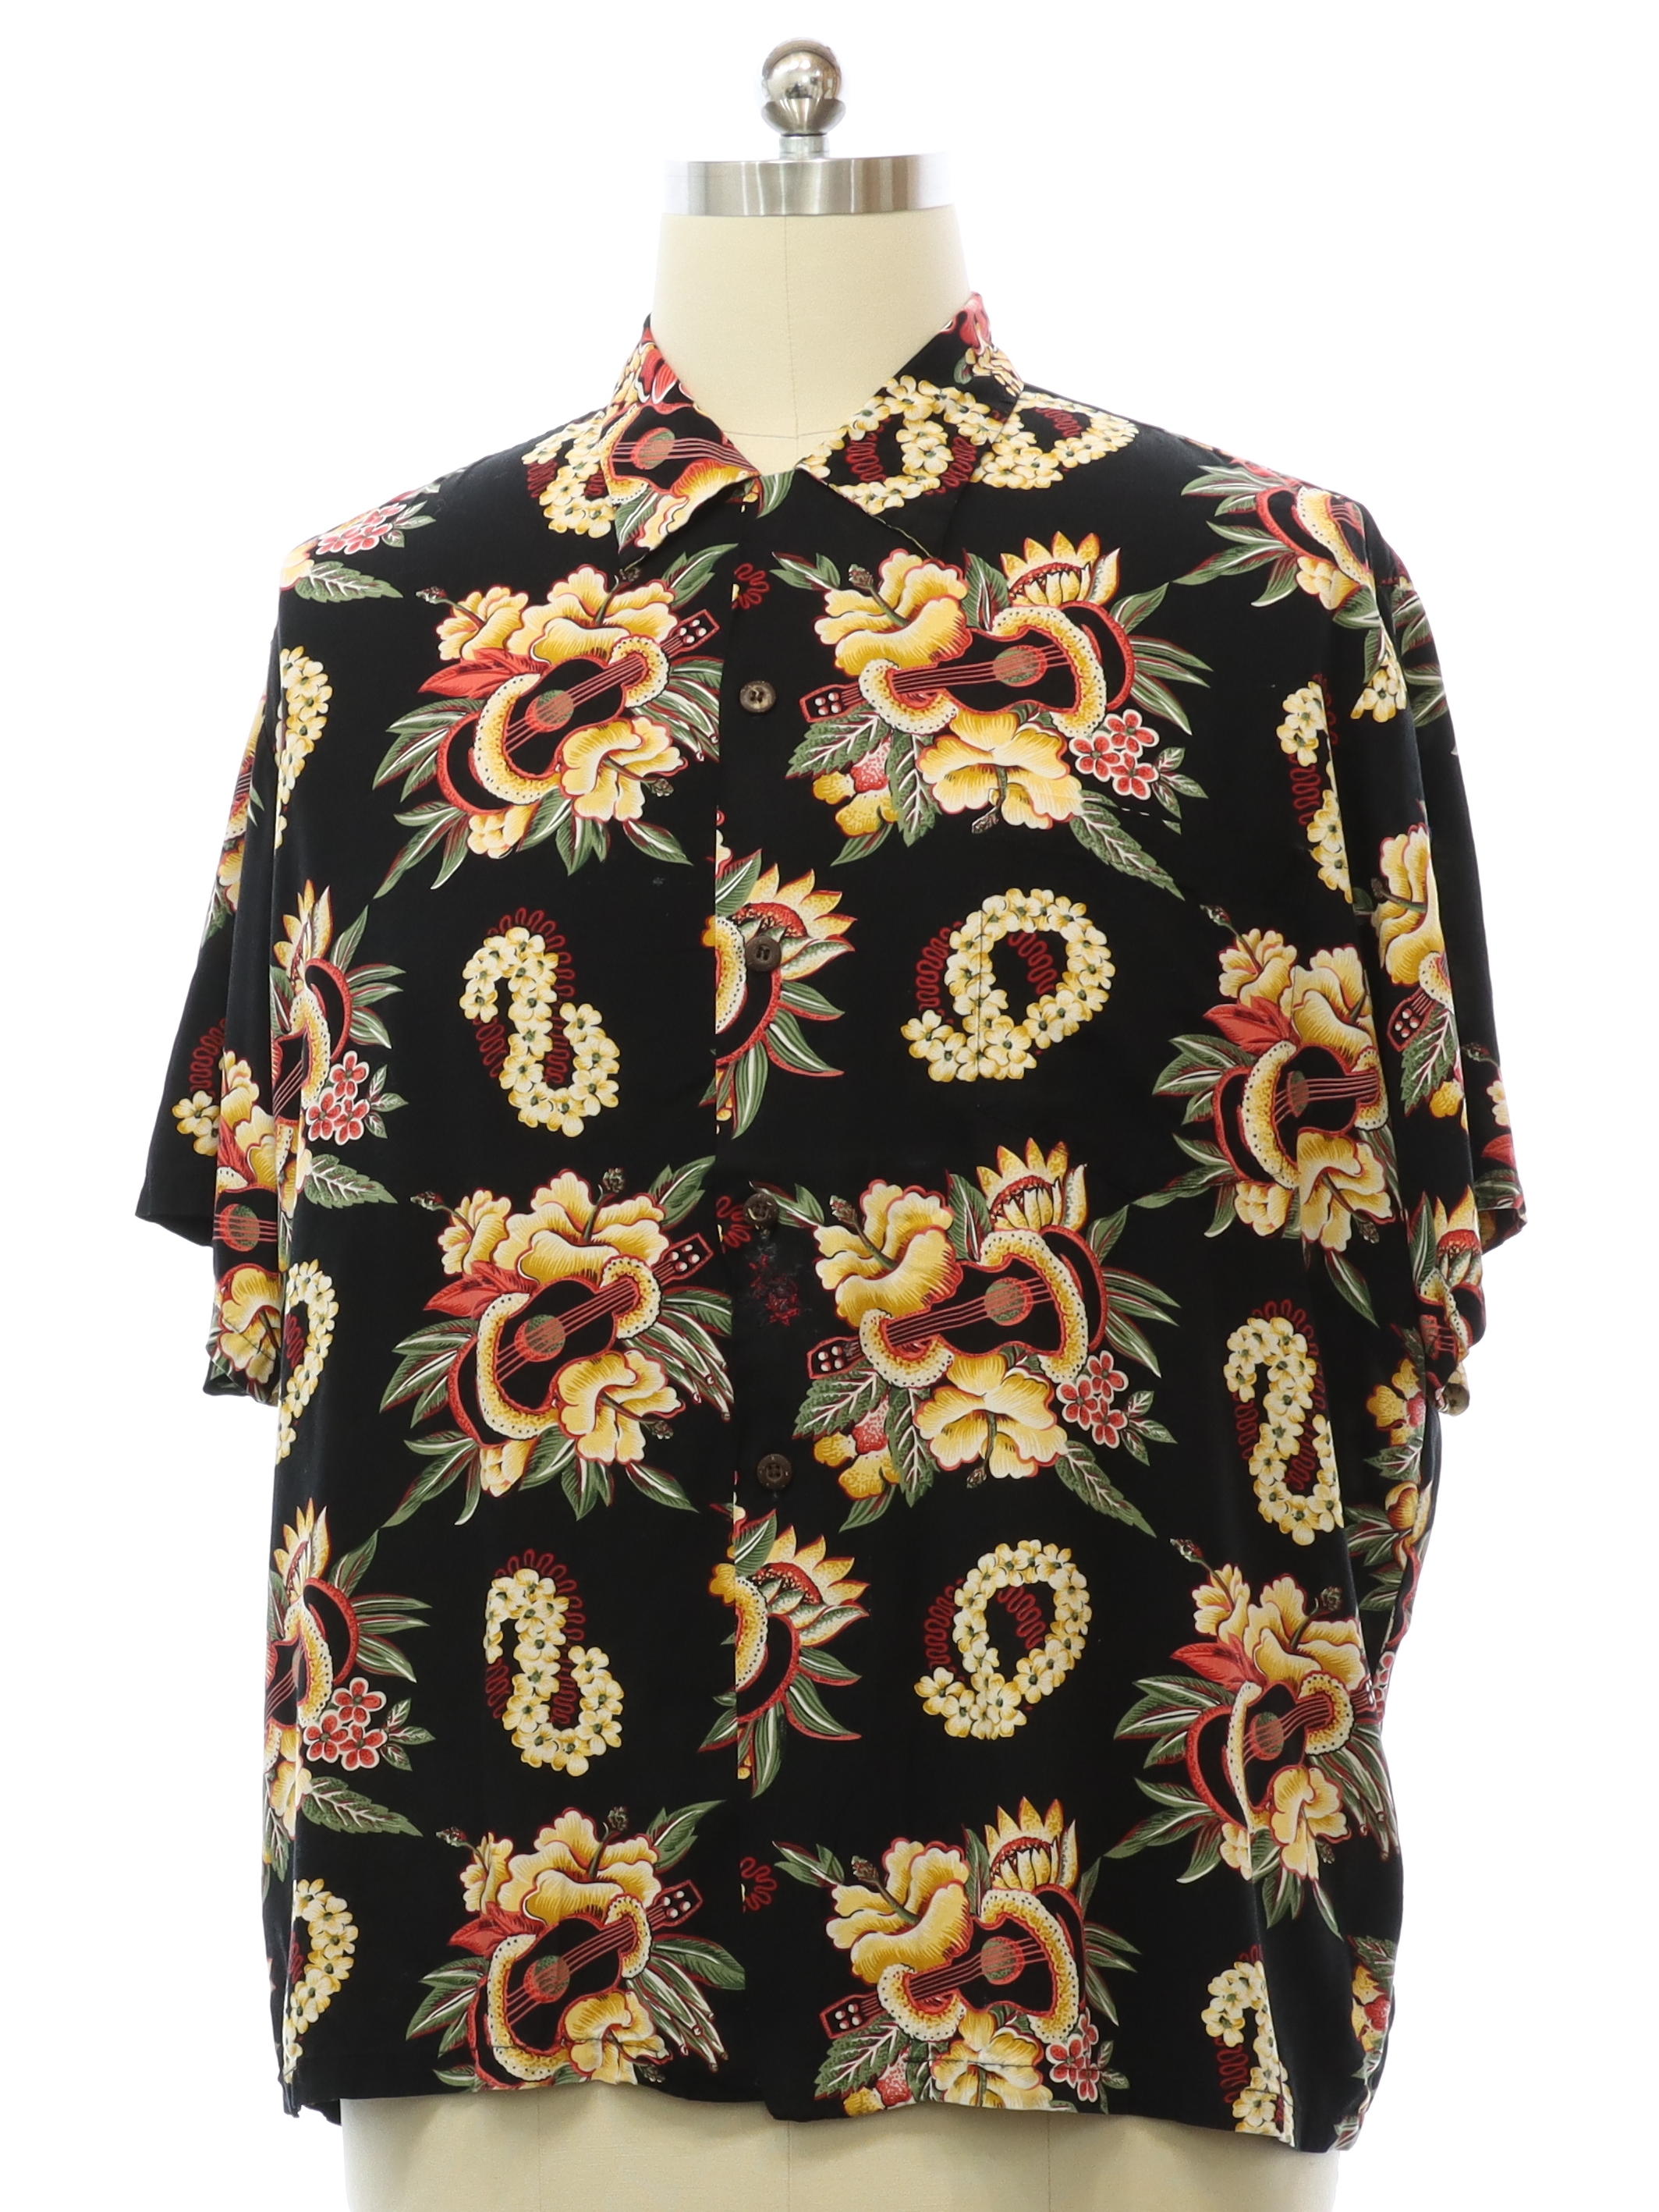 Pineapple Punch Hawaiian Shirt